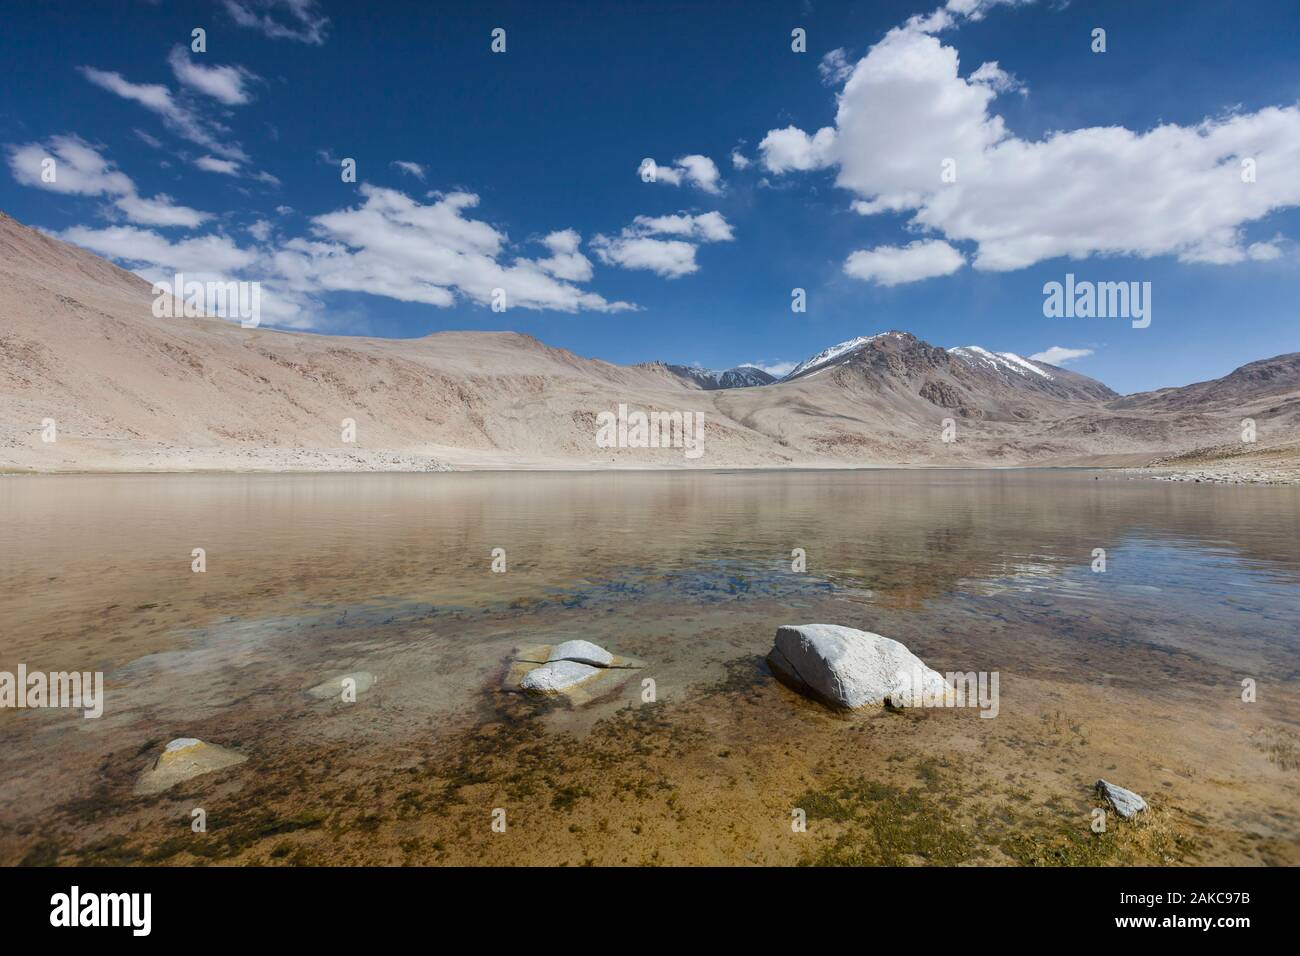 Tajikistan, Gorno-Badakhshan Autonomous Region, Chukurkul Lake, clear water and arid mountains in the background, altitude 3950m Stock Photo